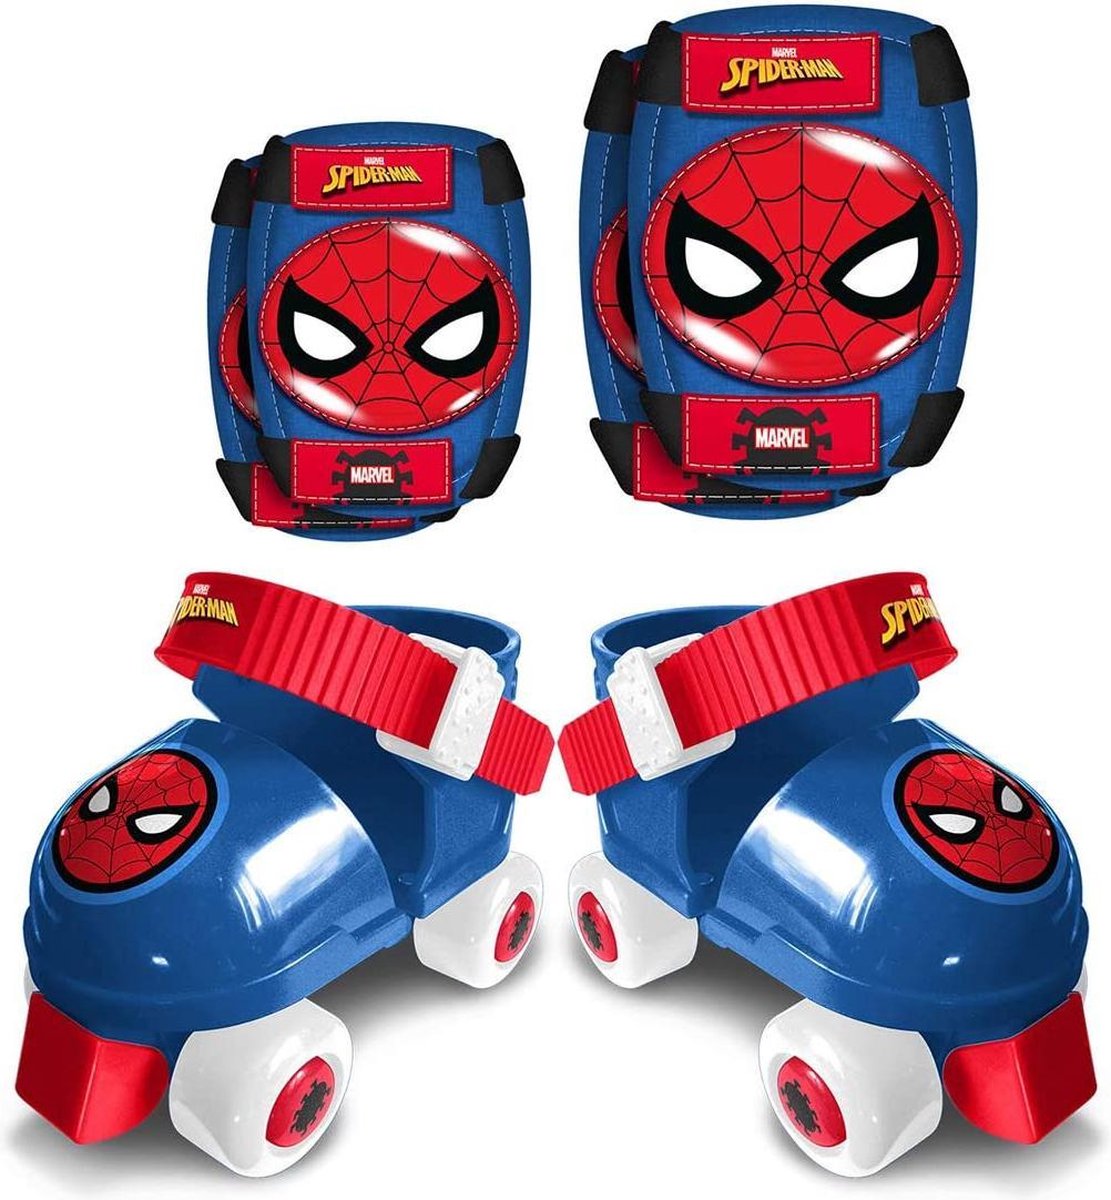   Rolschaatsset Marvel Spider-man Junior Blauw/rood Mt 23-27